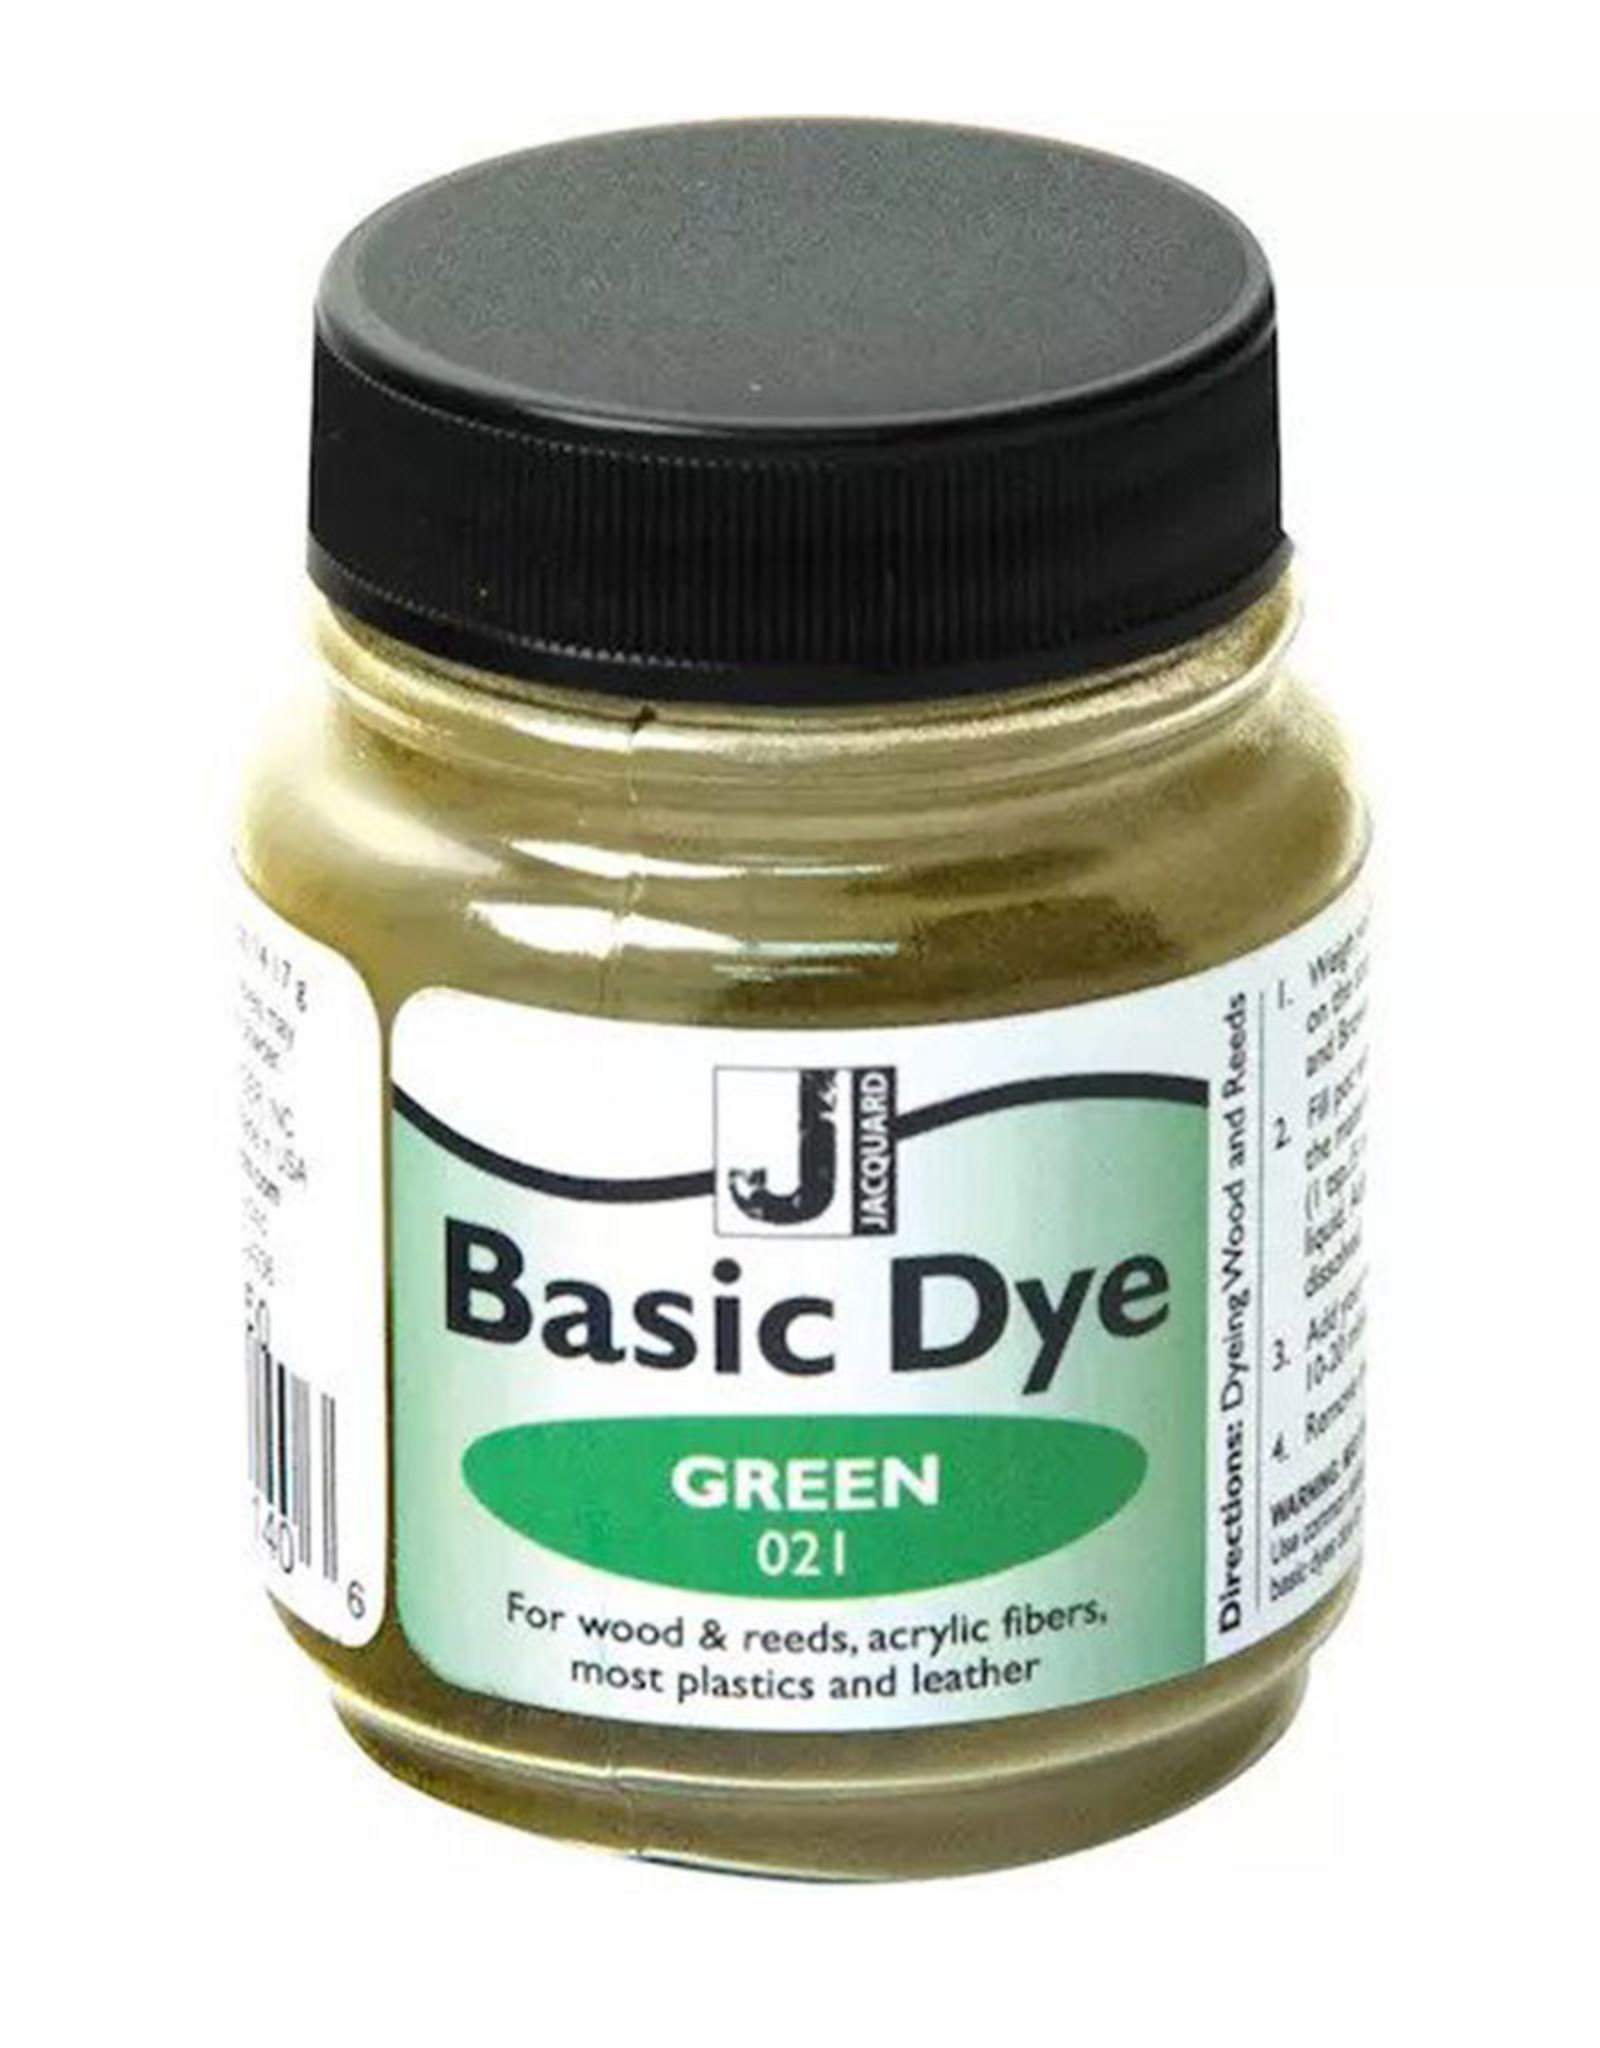 Jacquard Products Jacquard Basic Dye Green